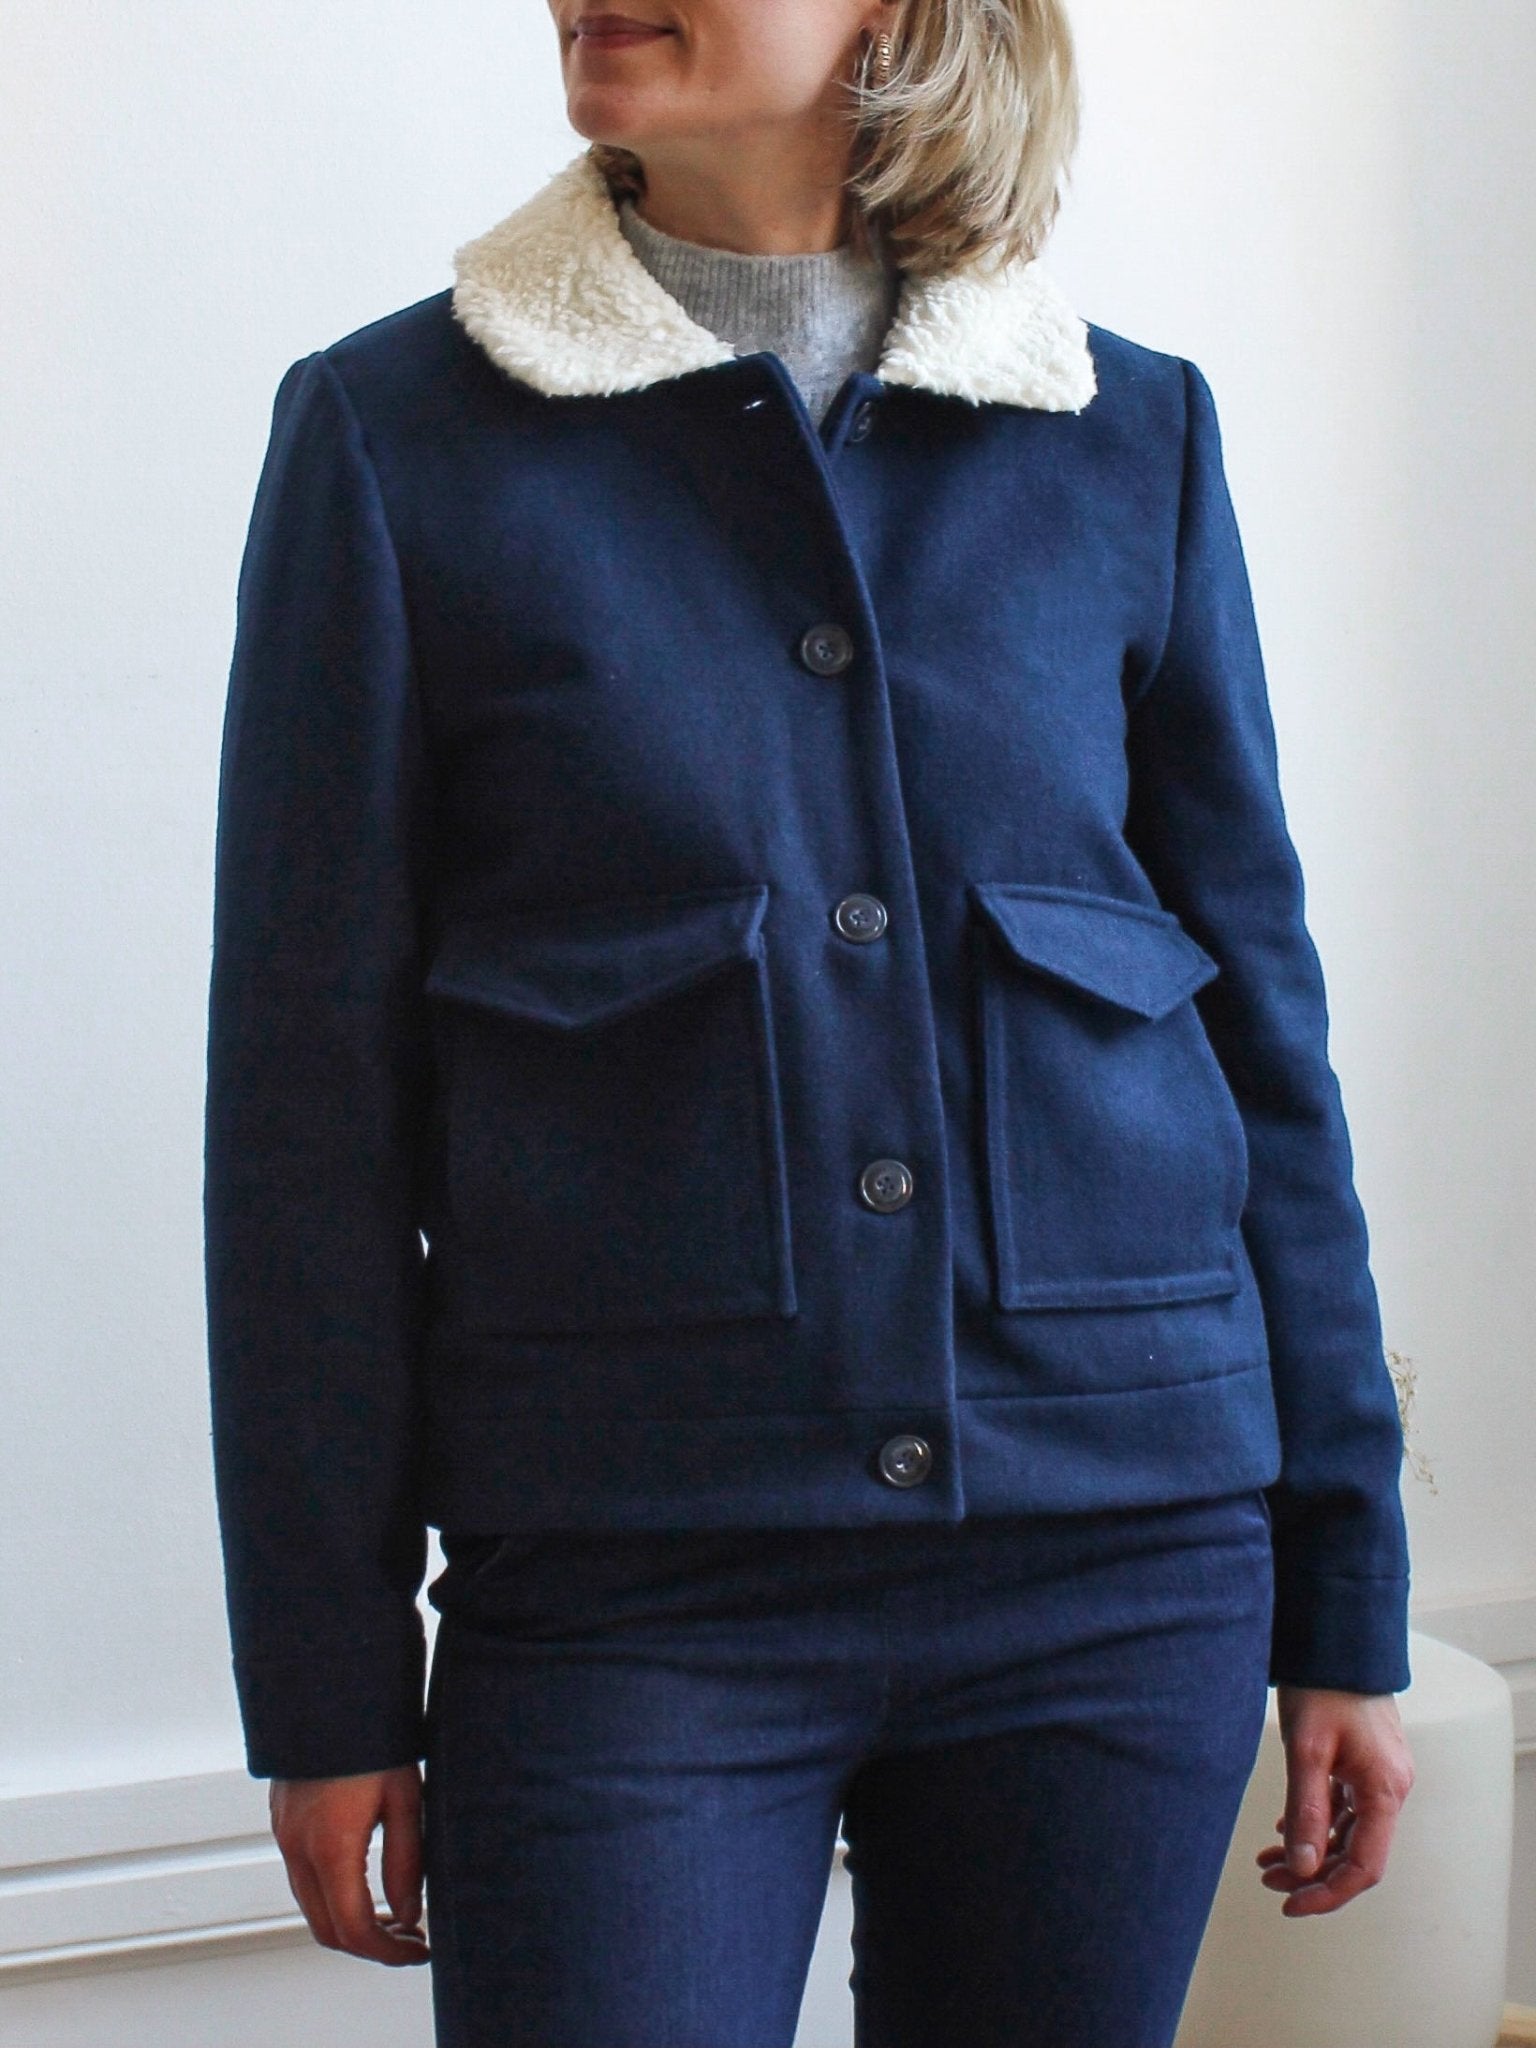 Sienna Jacket - pattern Couture PDF or paper - Joli Lab